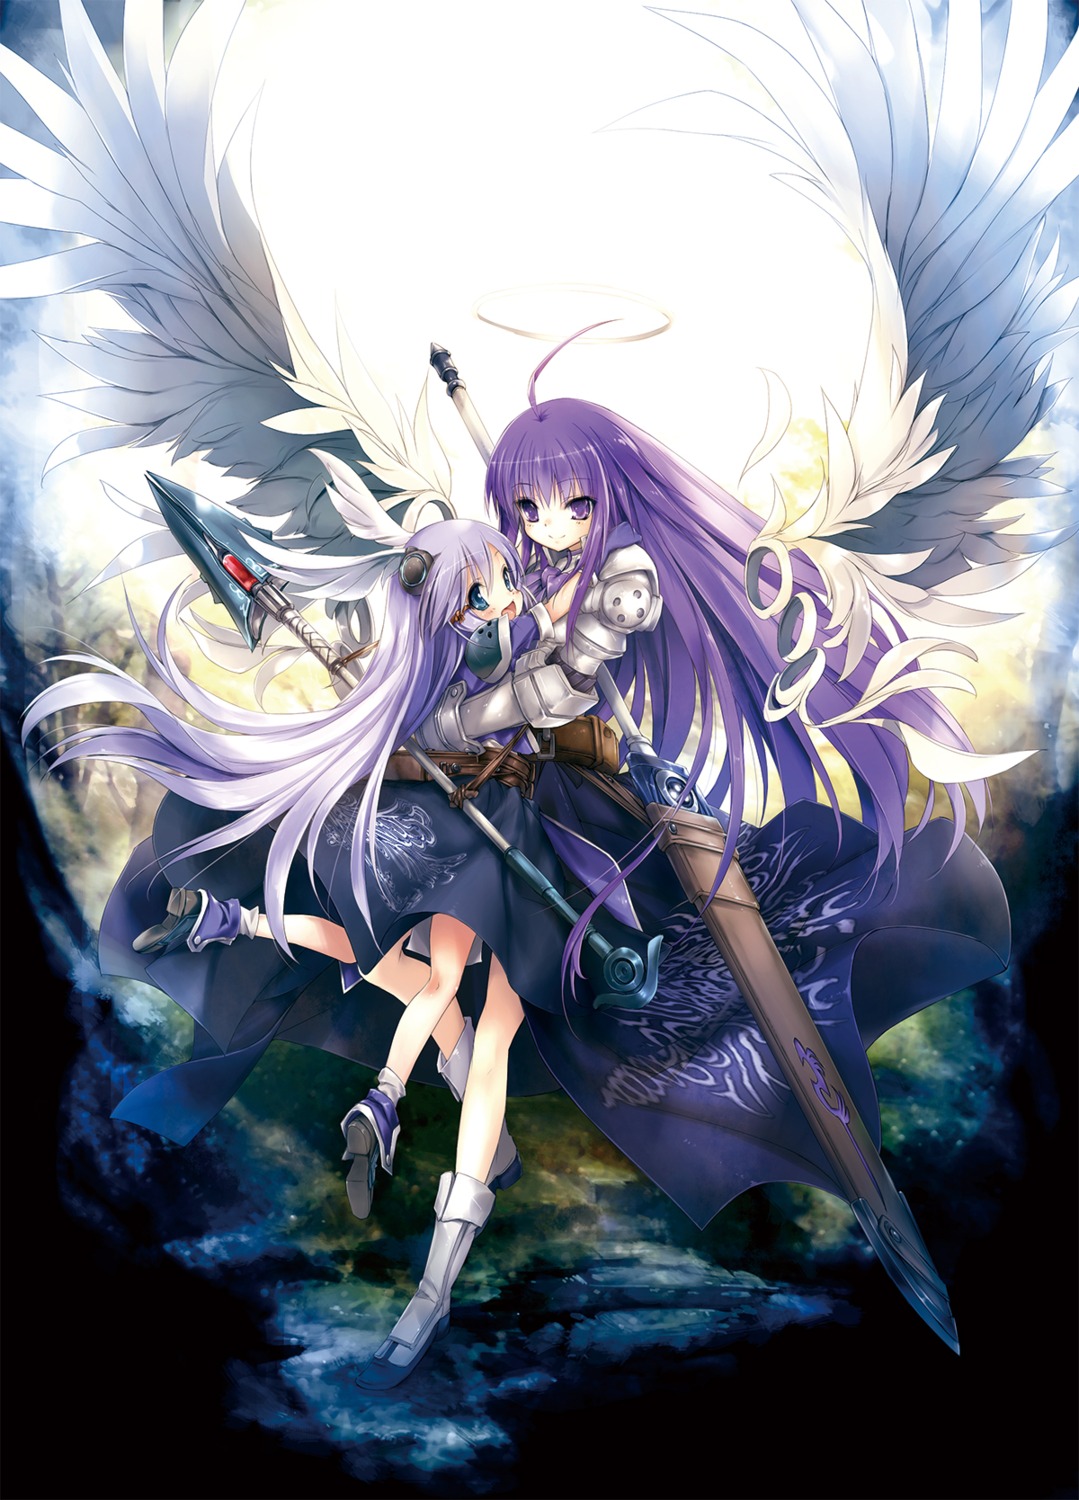 armor aselia_bluespirit dress eien_no_aselia heels hitomaru sword weapon wings